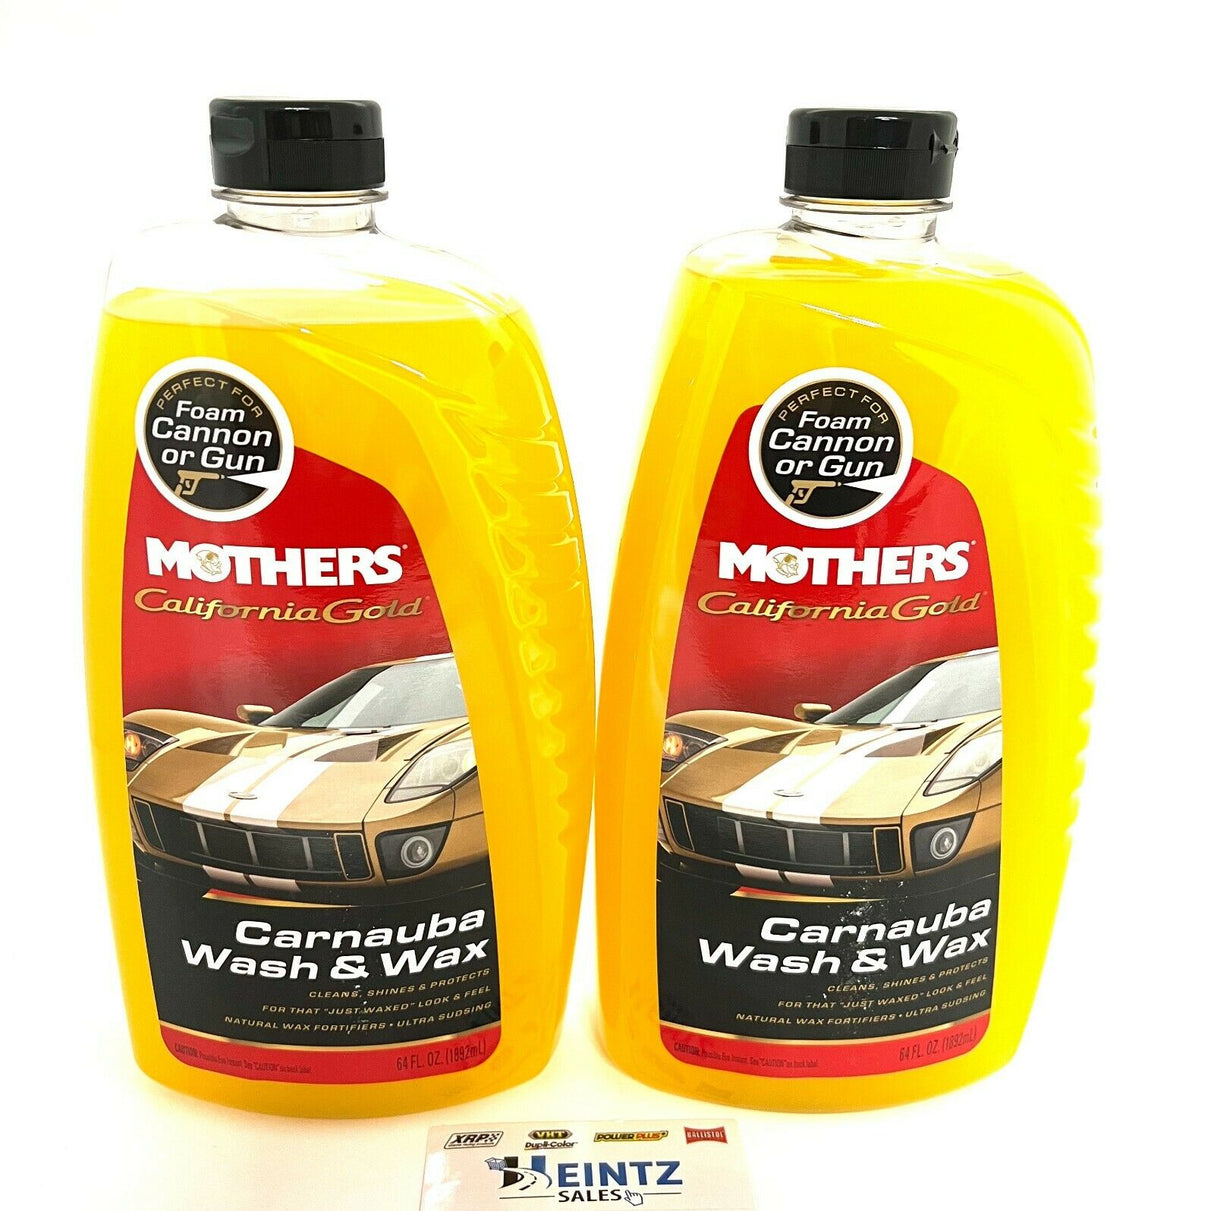 MOTHERS 05674 California Gold Carnauba Wash & Wax 2 PACK - Spot Free - 64 oz.